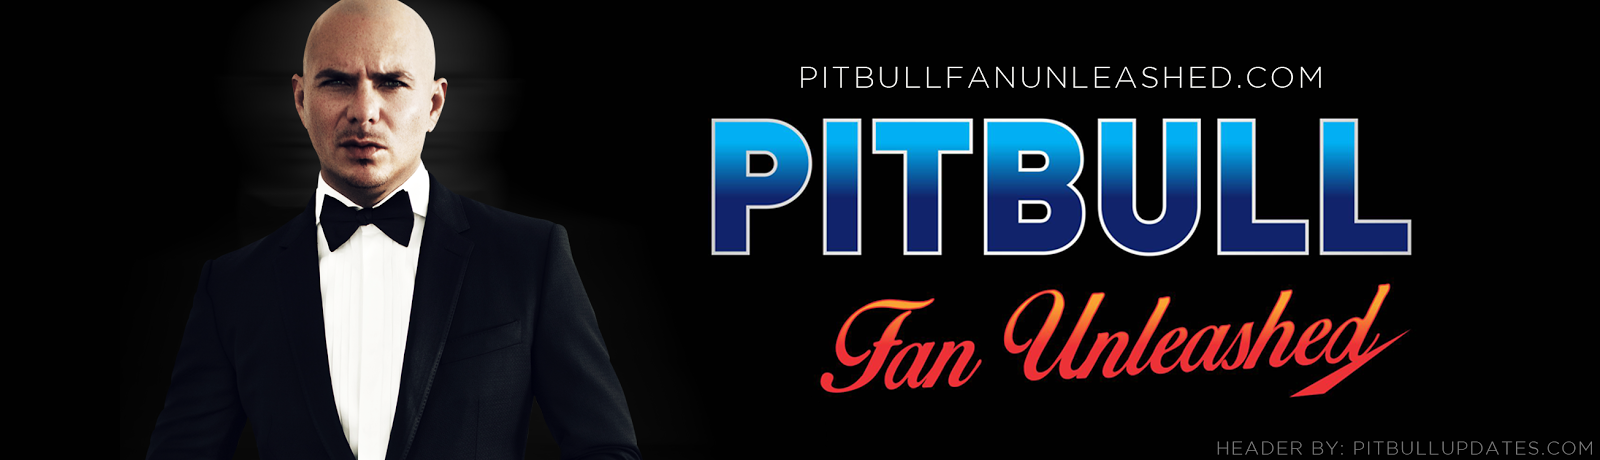 <b>Pitbull Fan Unleashed!</b>